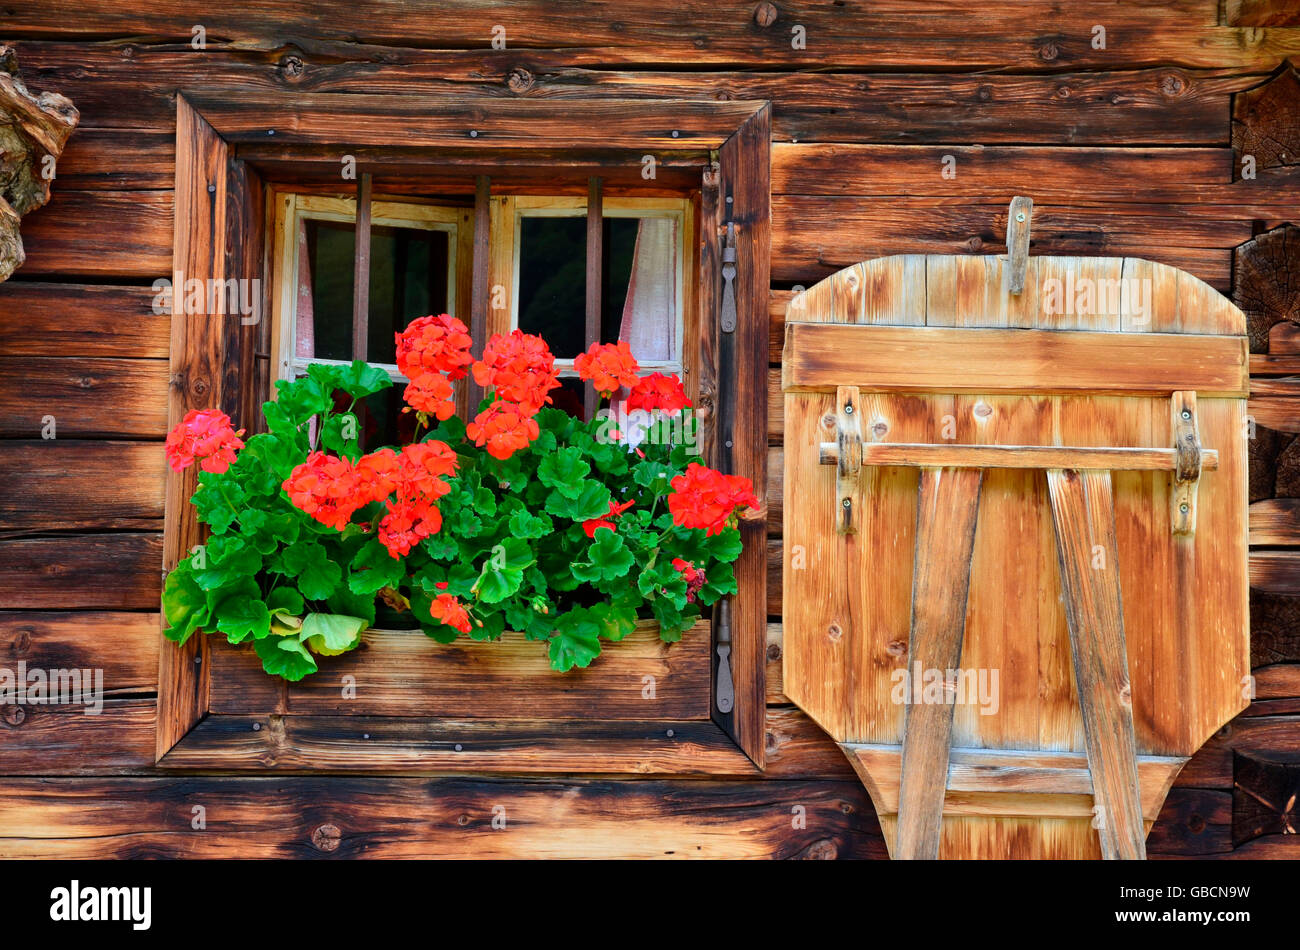 Almhuette, Holzhuette, Blumenfenster, Tirol, Österreich Banque D'Images